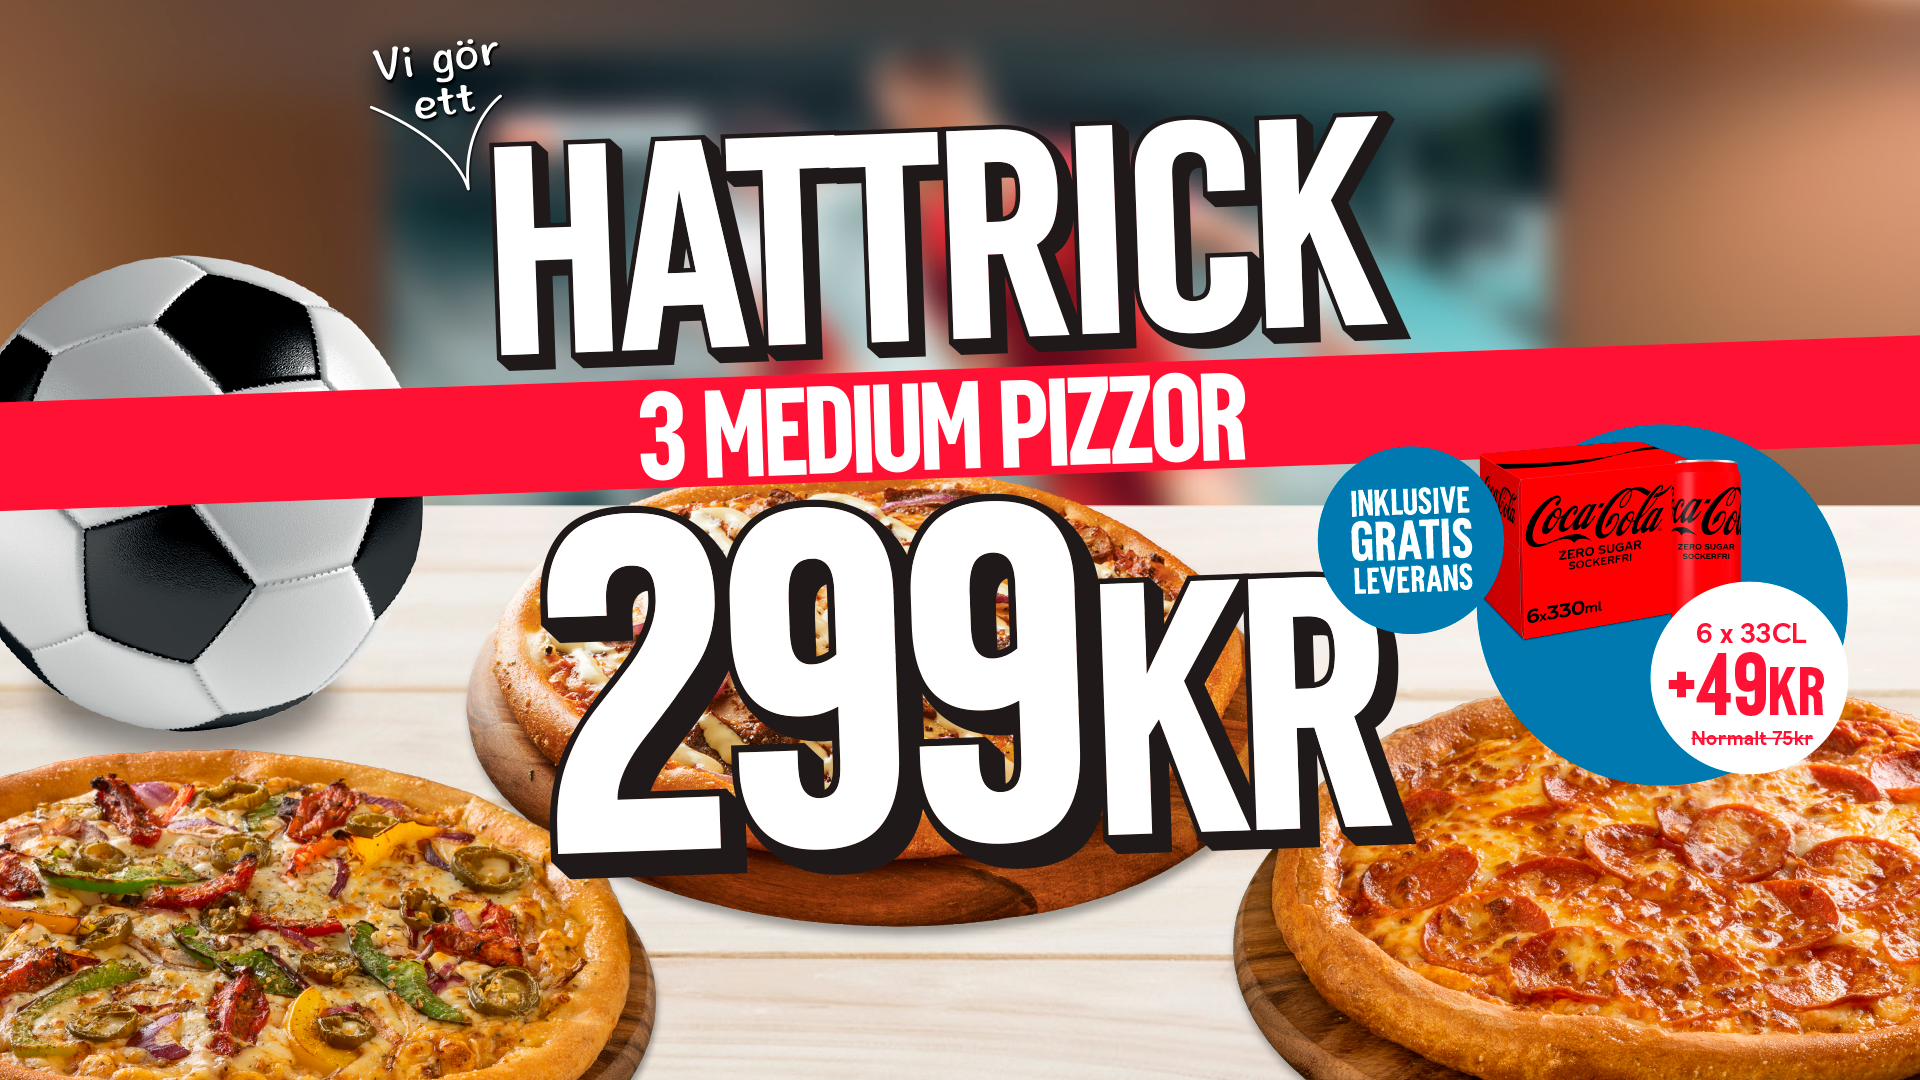 Hattrick Deal